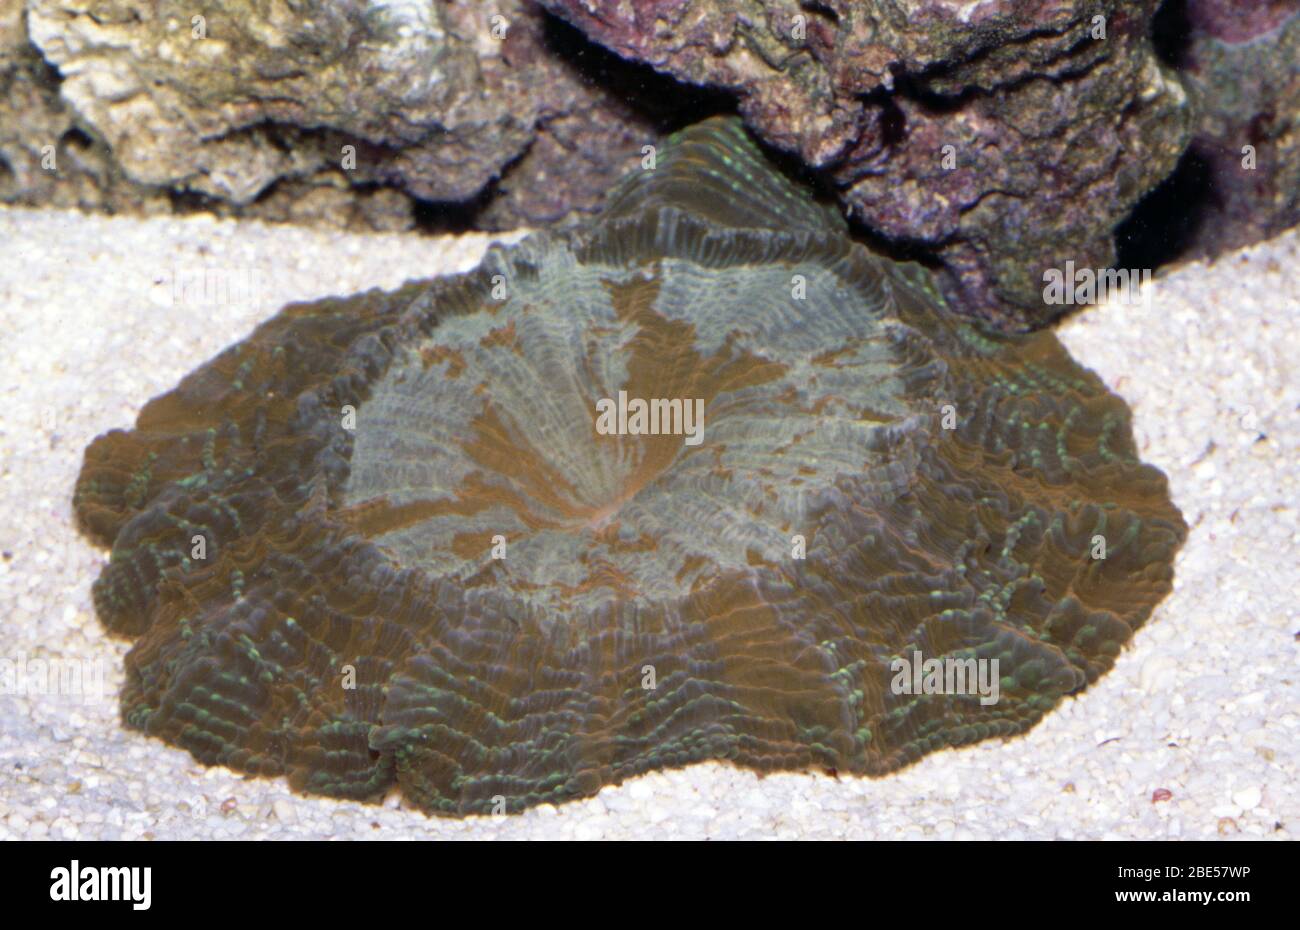 Flat cup or button coral, Cynarina lacrymalis Stock Photo